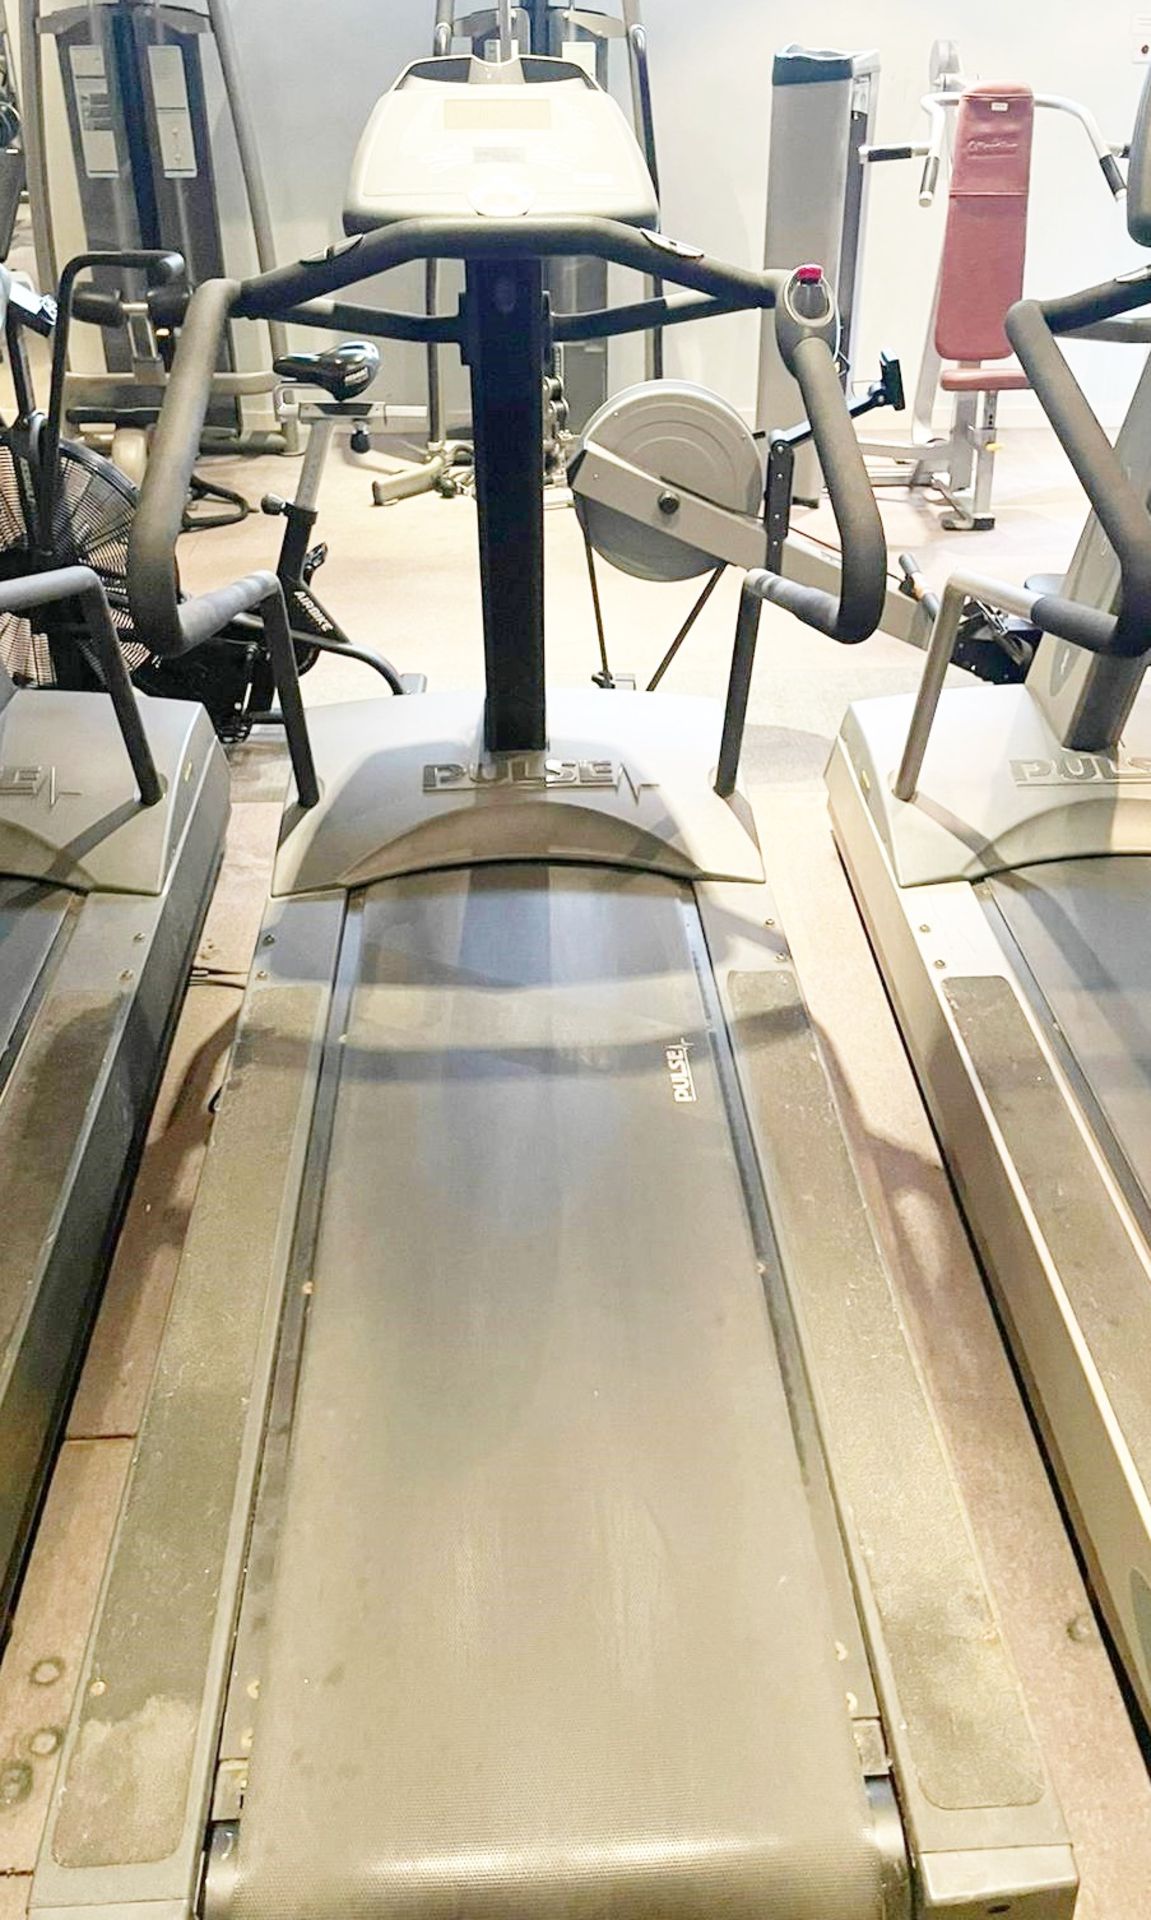 1 x Pulse Ascent Treadmill (Cardio Theatre - Fit linxx - Polar) - Image 3 of 3